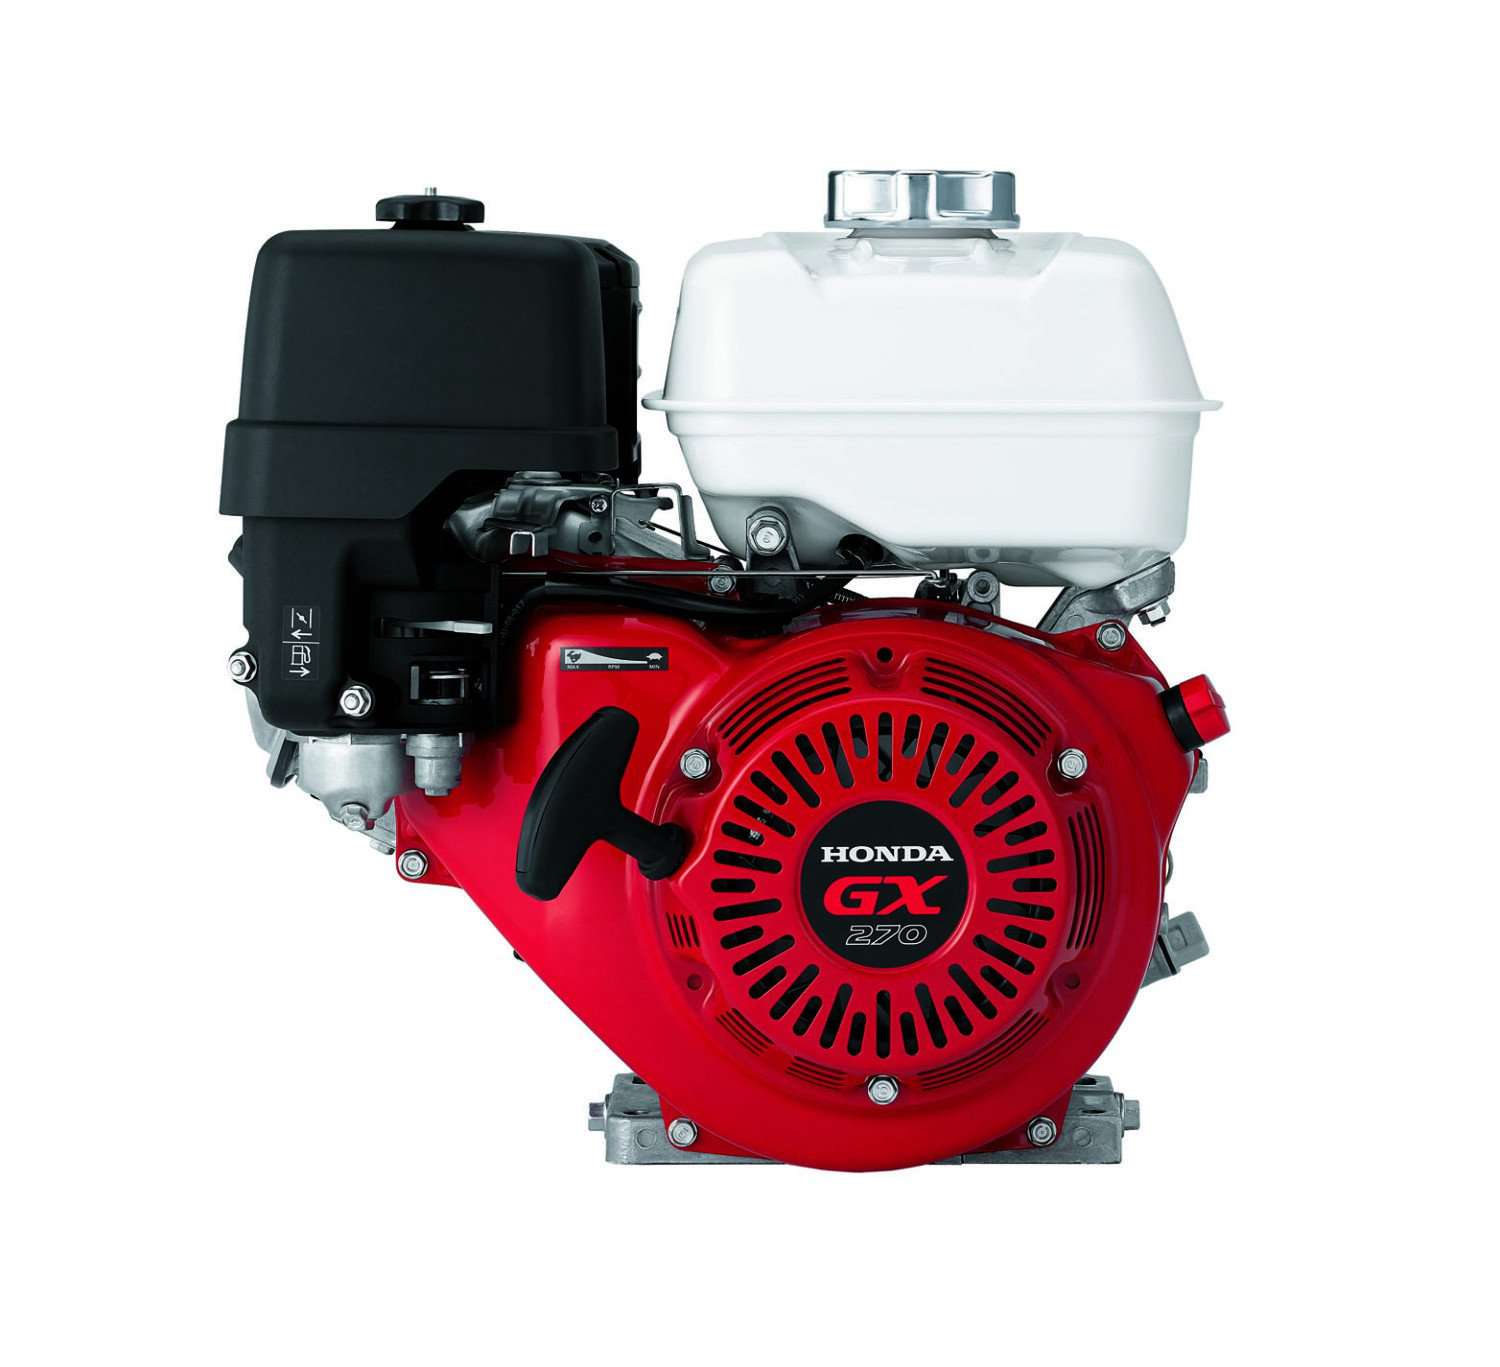 Simpson ALH4033 4000 PSI 3.3 GPM Honda Gas Pressure Washer Manufacturer RFB